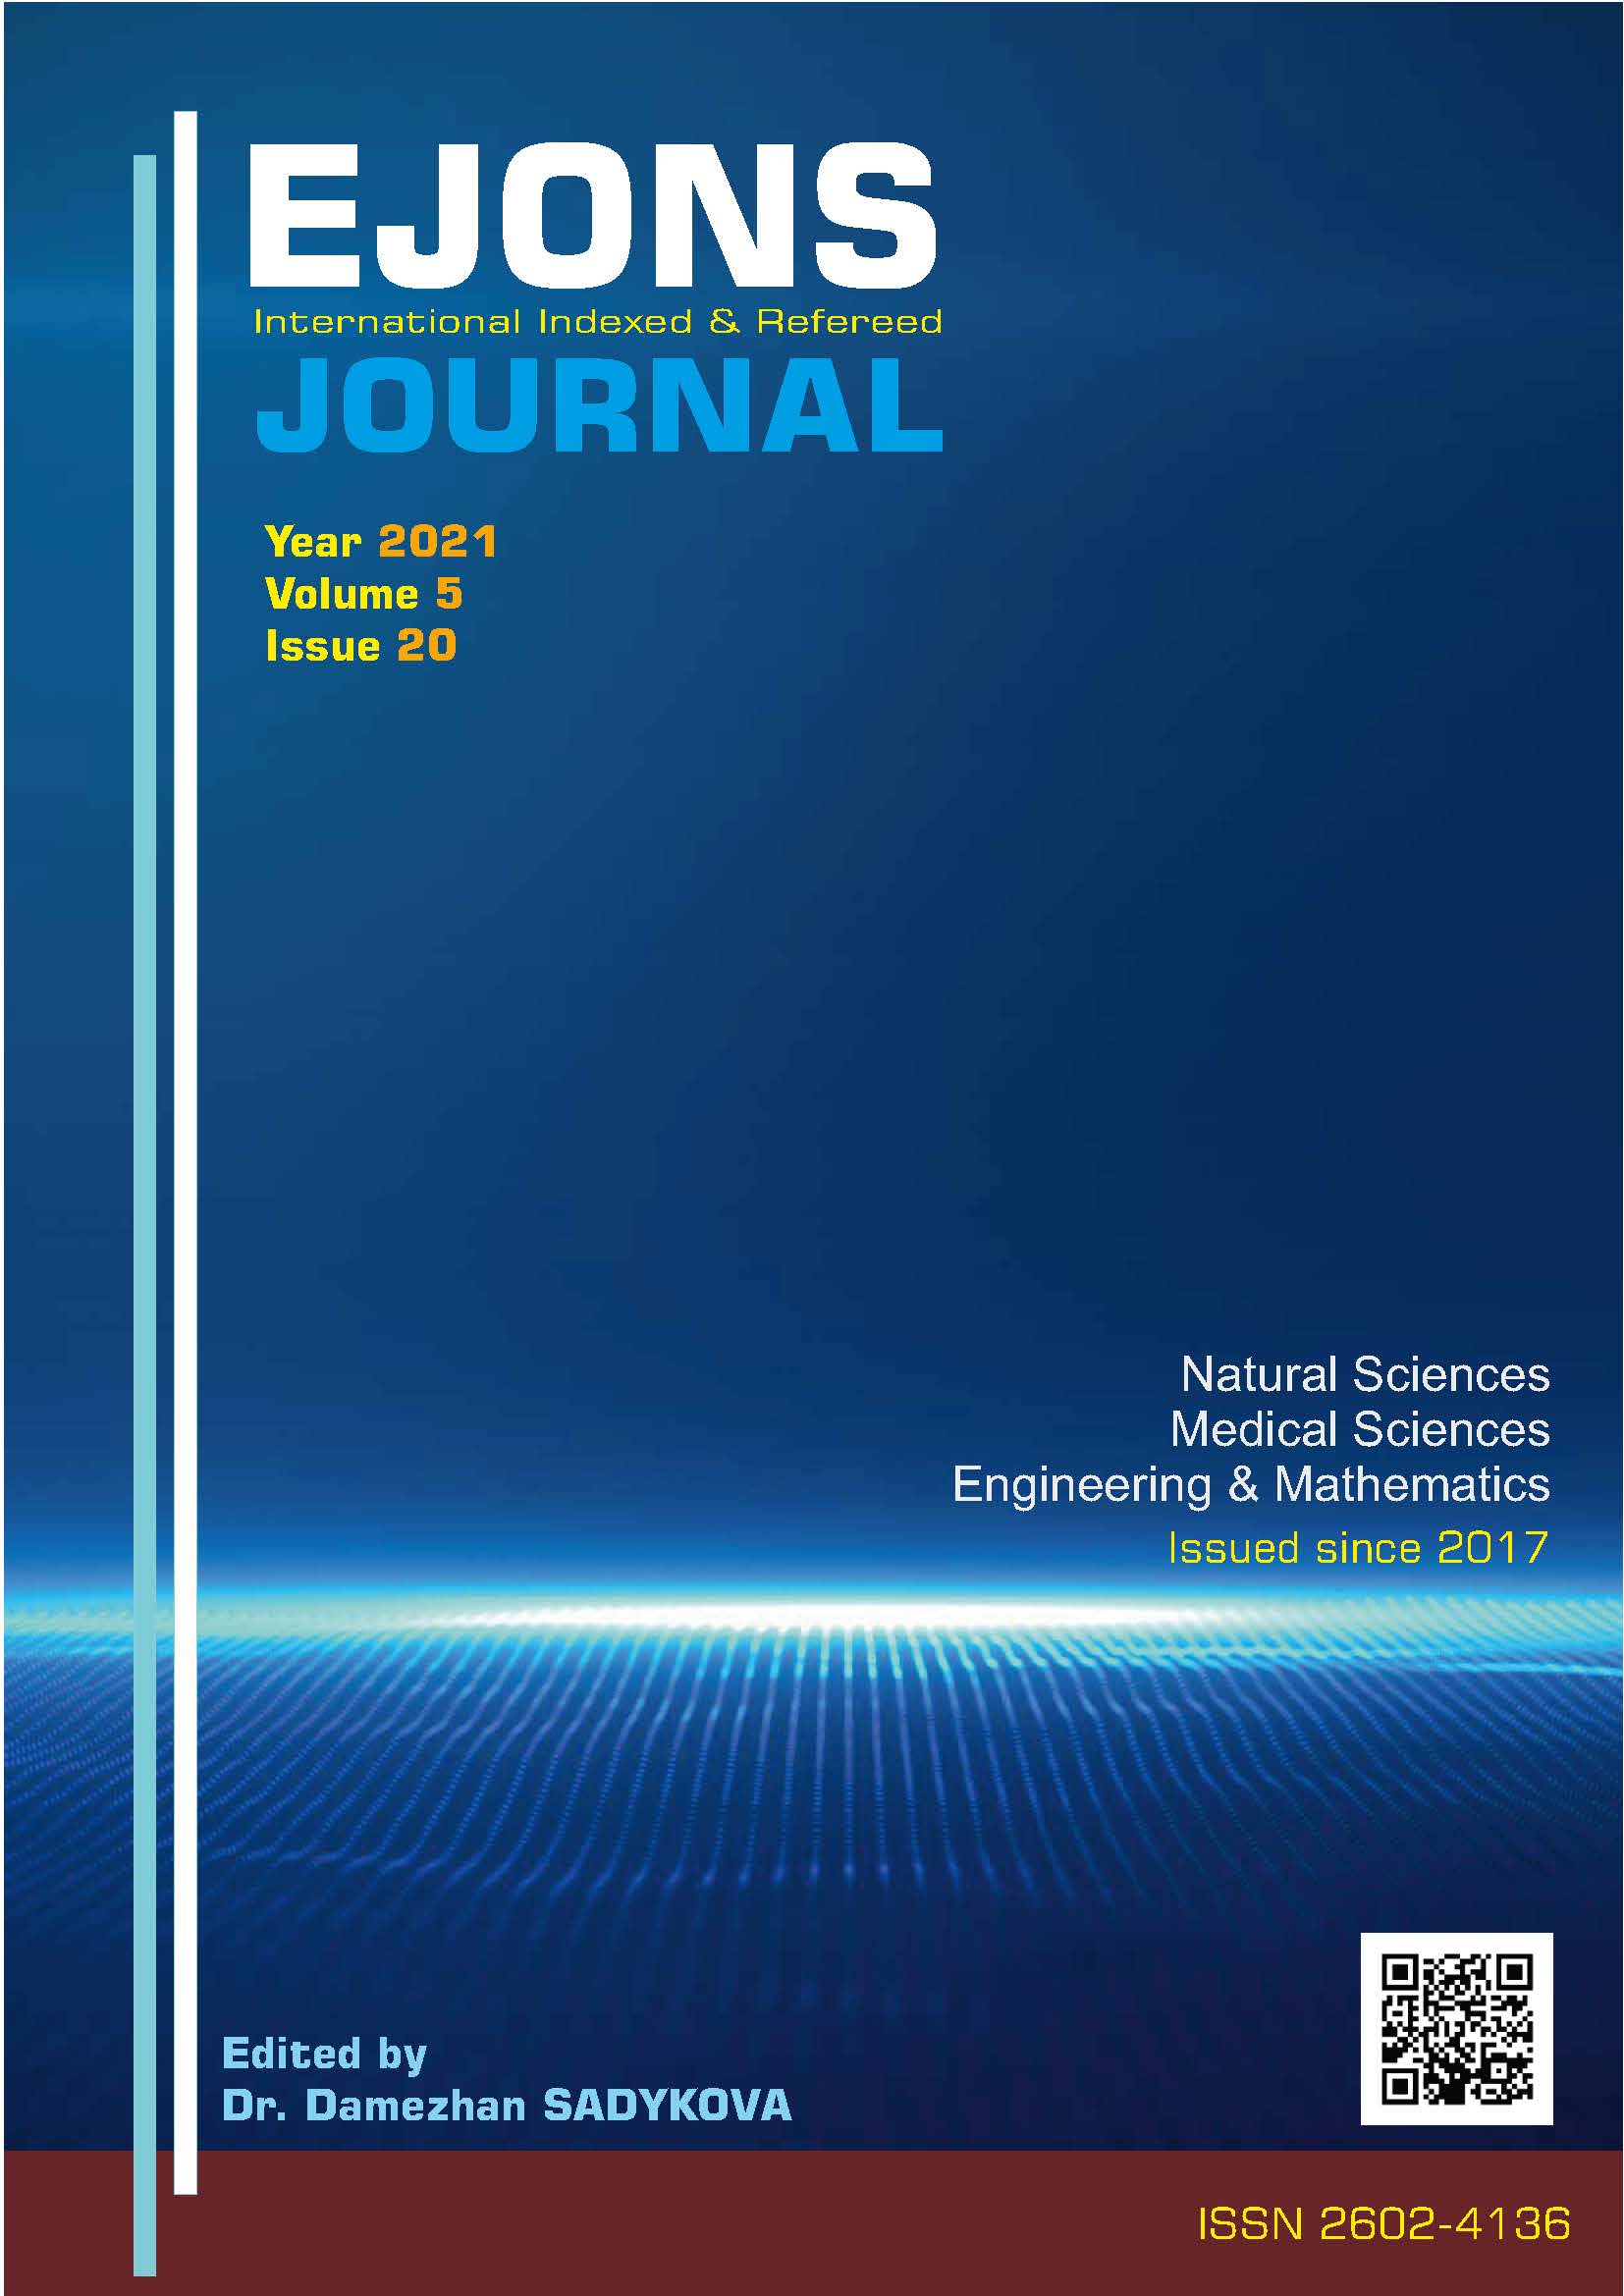 					Cilt 5 Sayı 20 (2021): EJONS Journal Gör
				